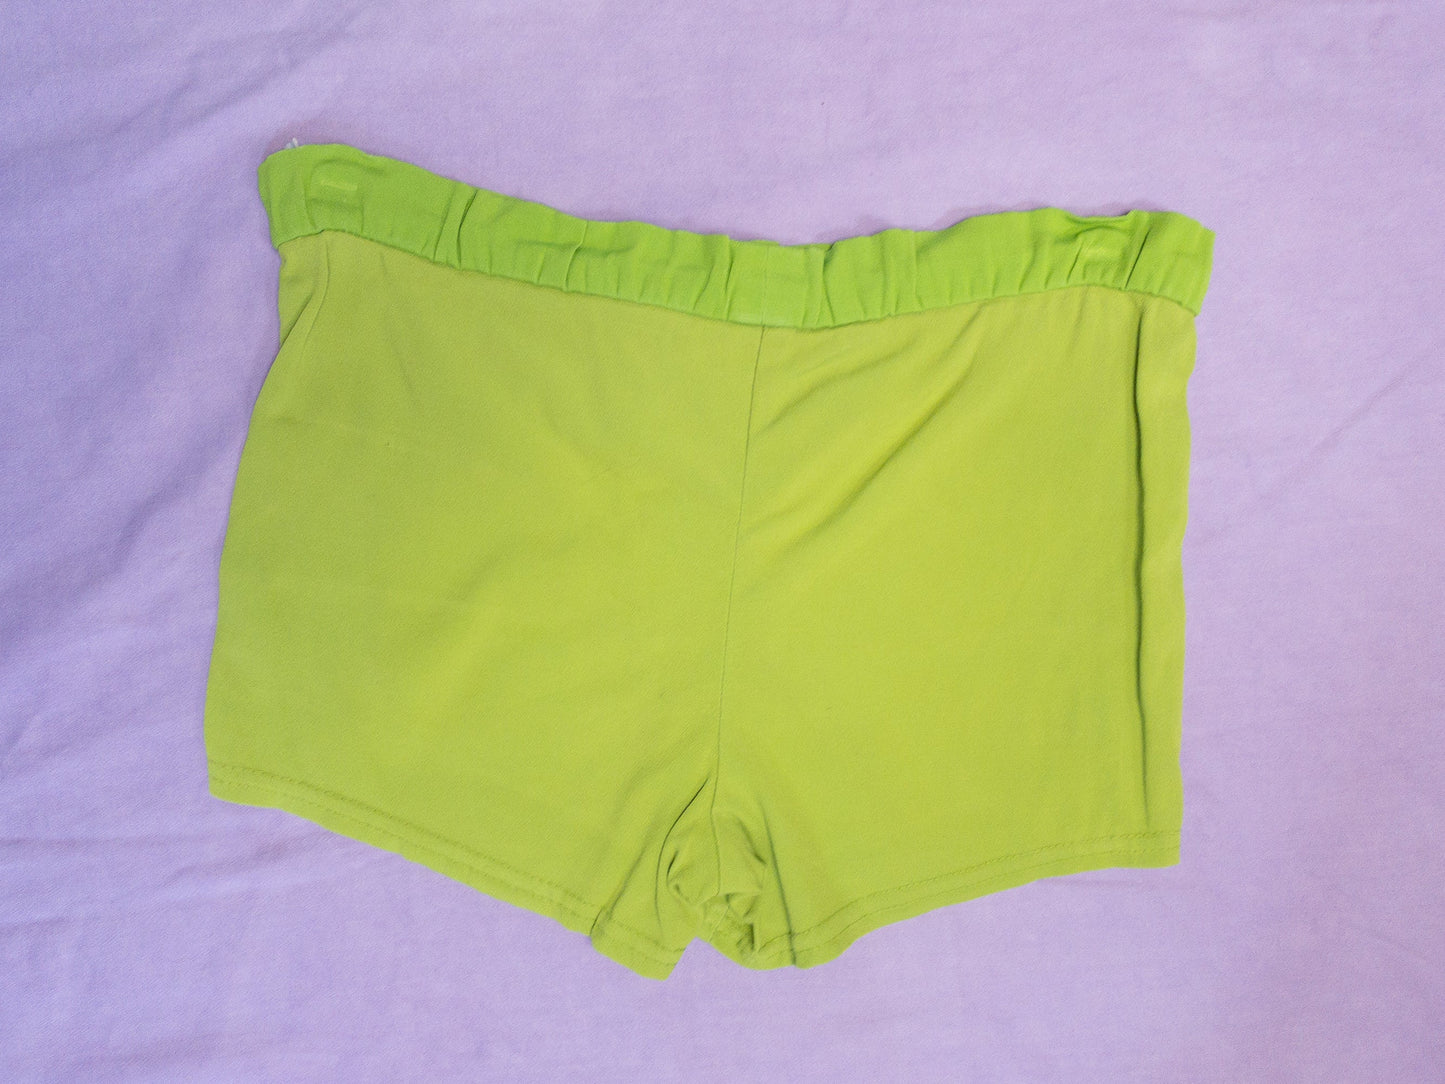 60s Lime Green Swim Trunk Booty Short | XS/S/M